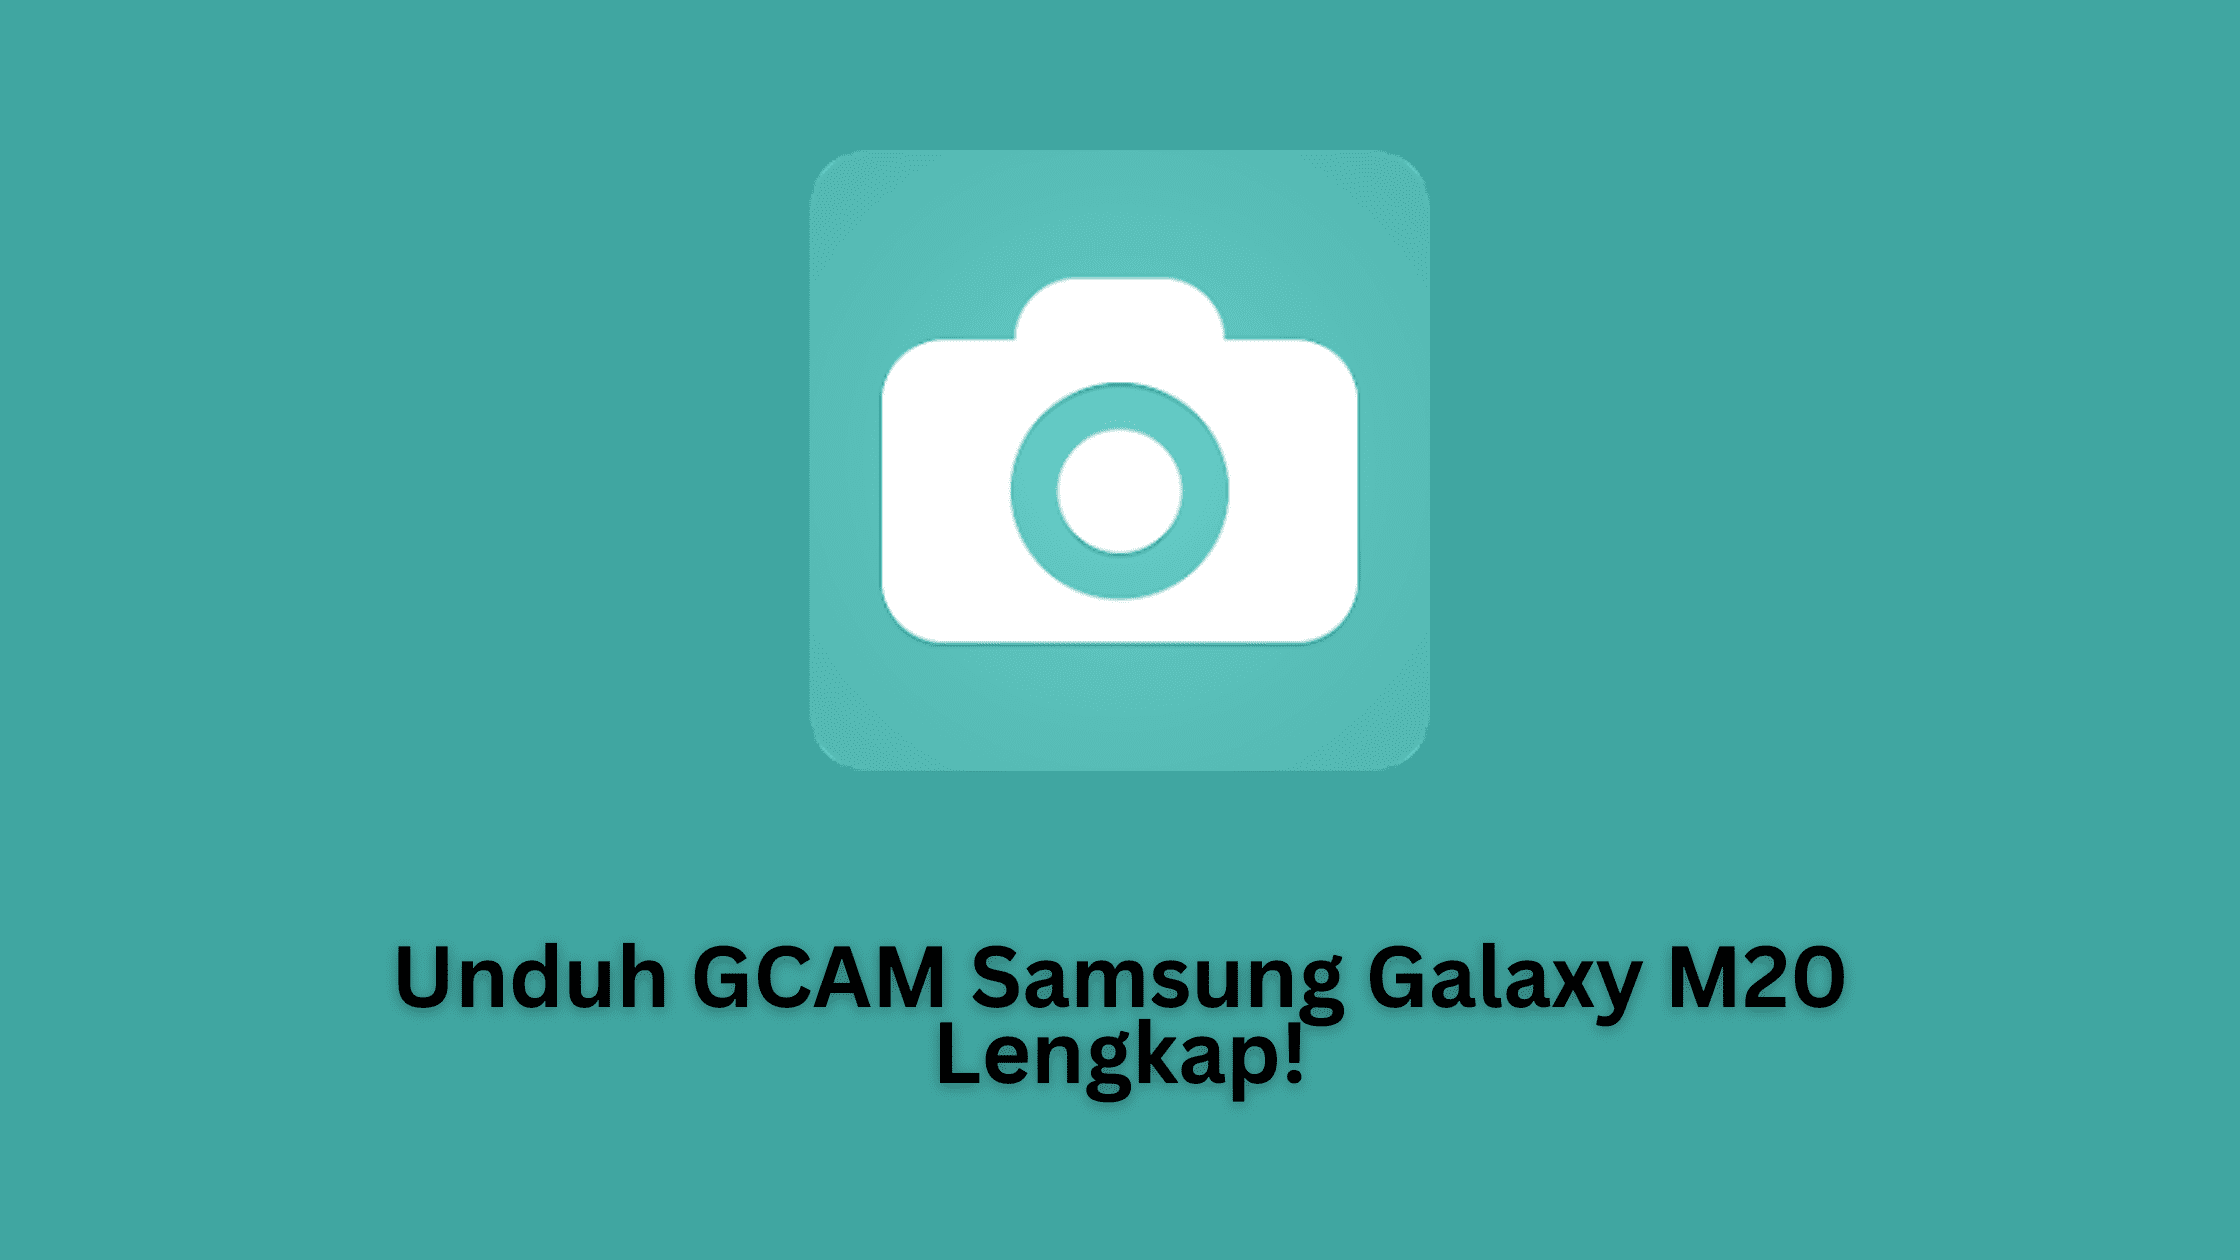 Unduh GCAM Samsung Galaxy M20; NIkita, BSG, Parrot, Bulkin, Burial, Arnova, URNYK, Hypercam, TR Camera, Berikut Config Terbaru 2022